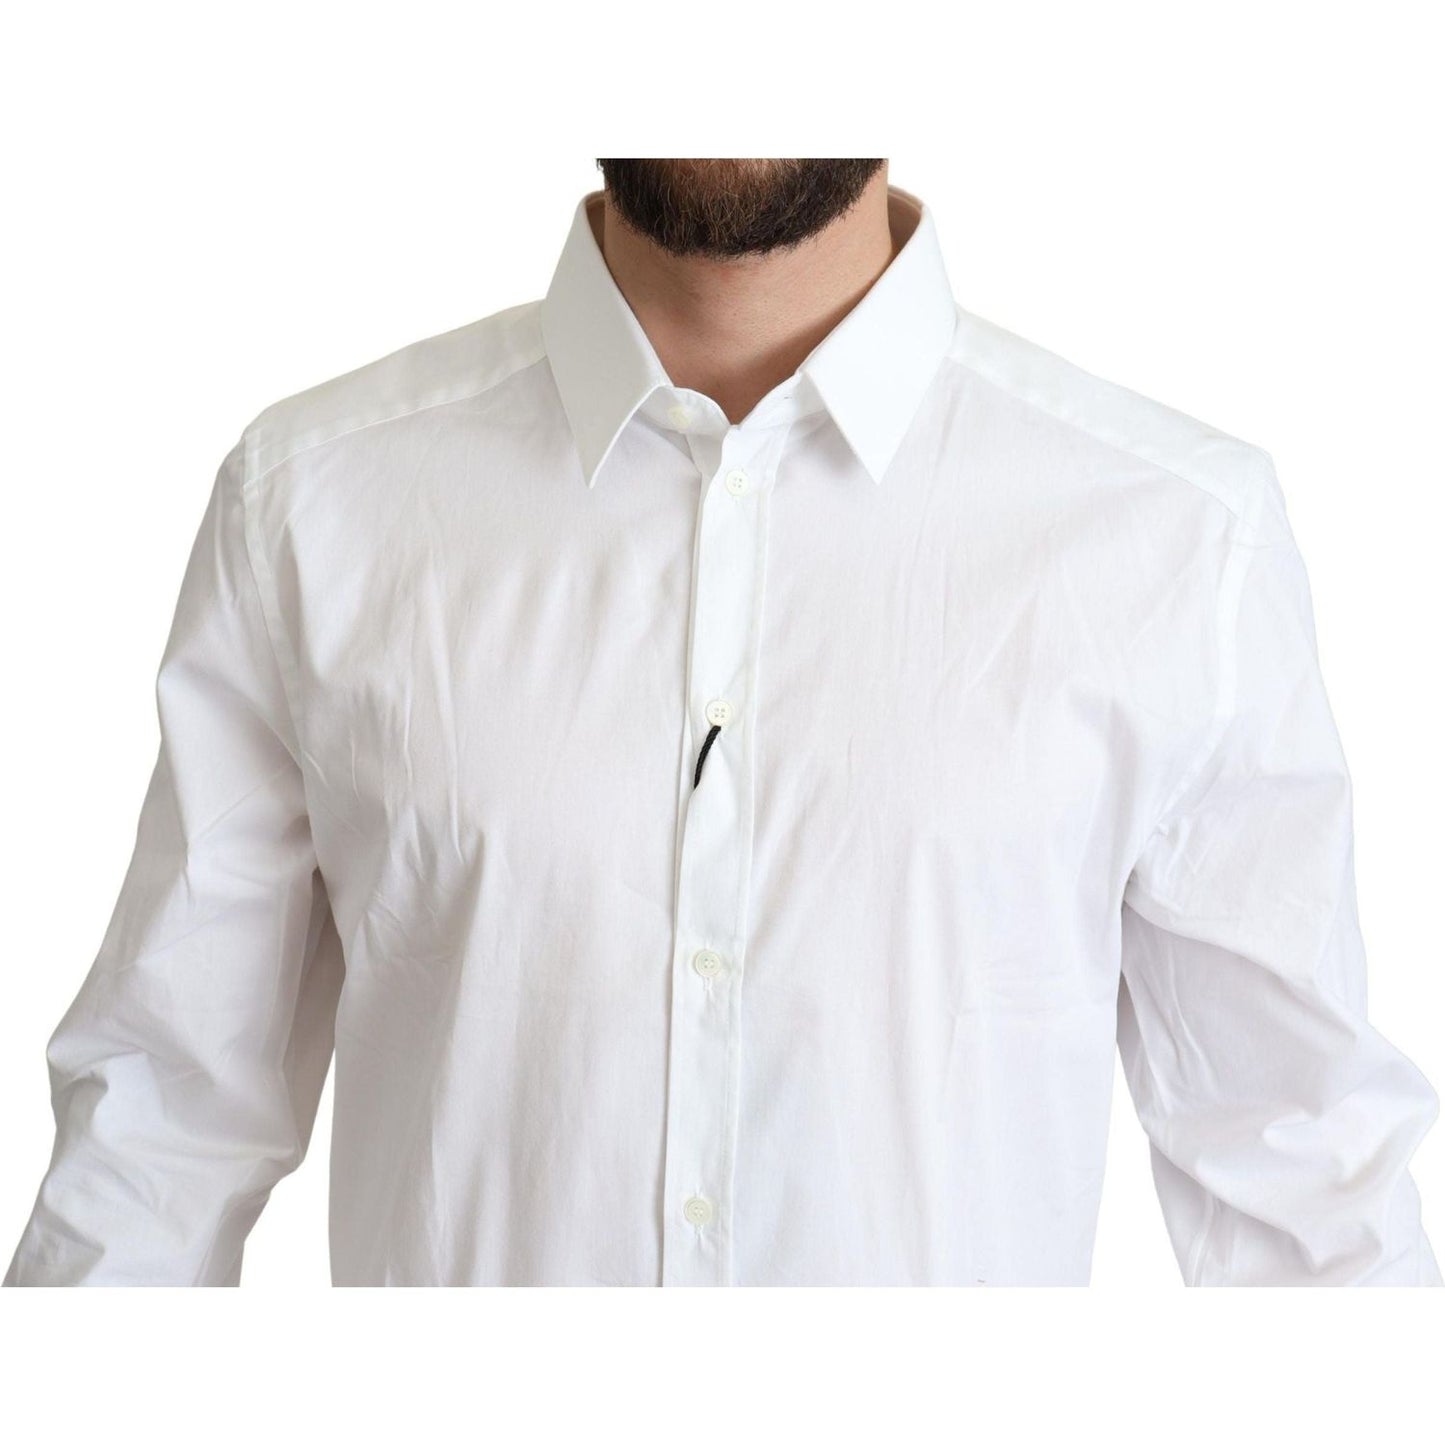 Dolce & Gabbana Elegant White Cotton Stretch Dress Shirt MAN SHIRTS white-cotton-stretch-men-dress-formal-shirt